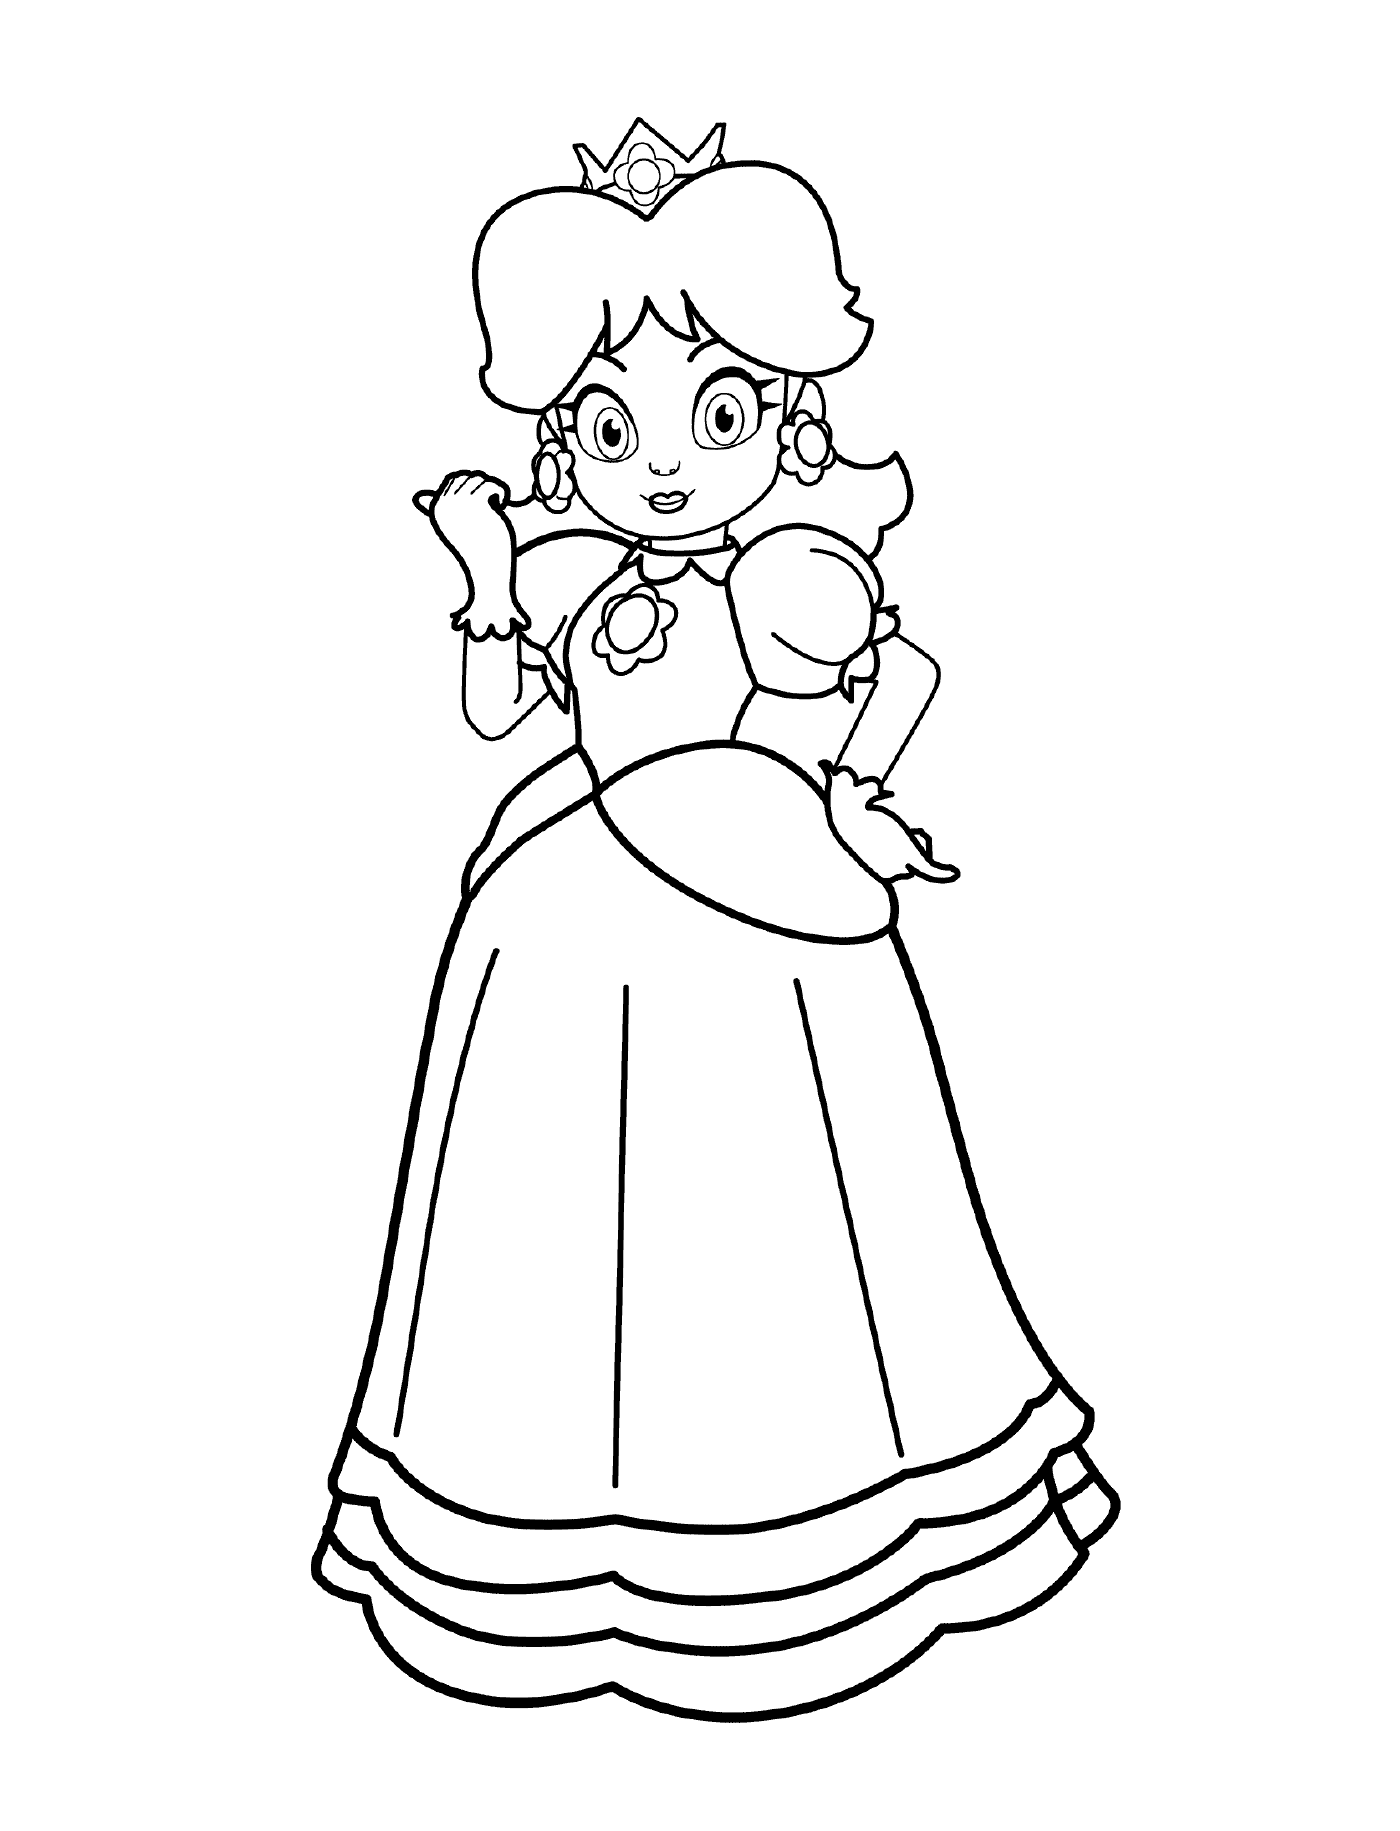   La princesse Daisy, une femme en robe 